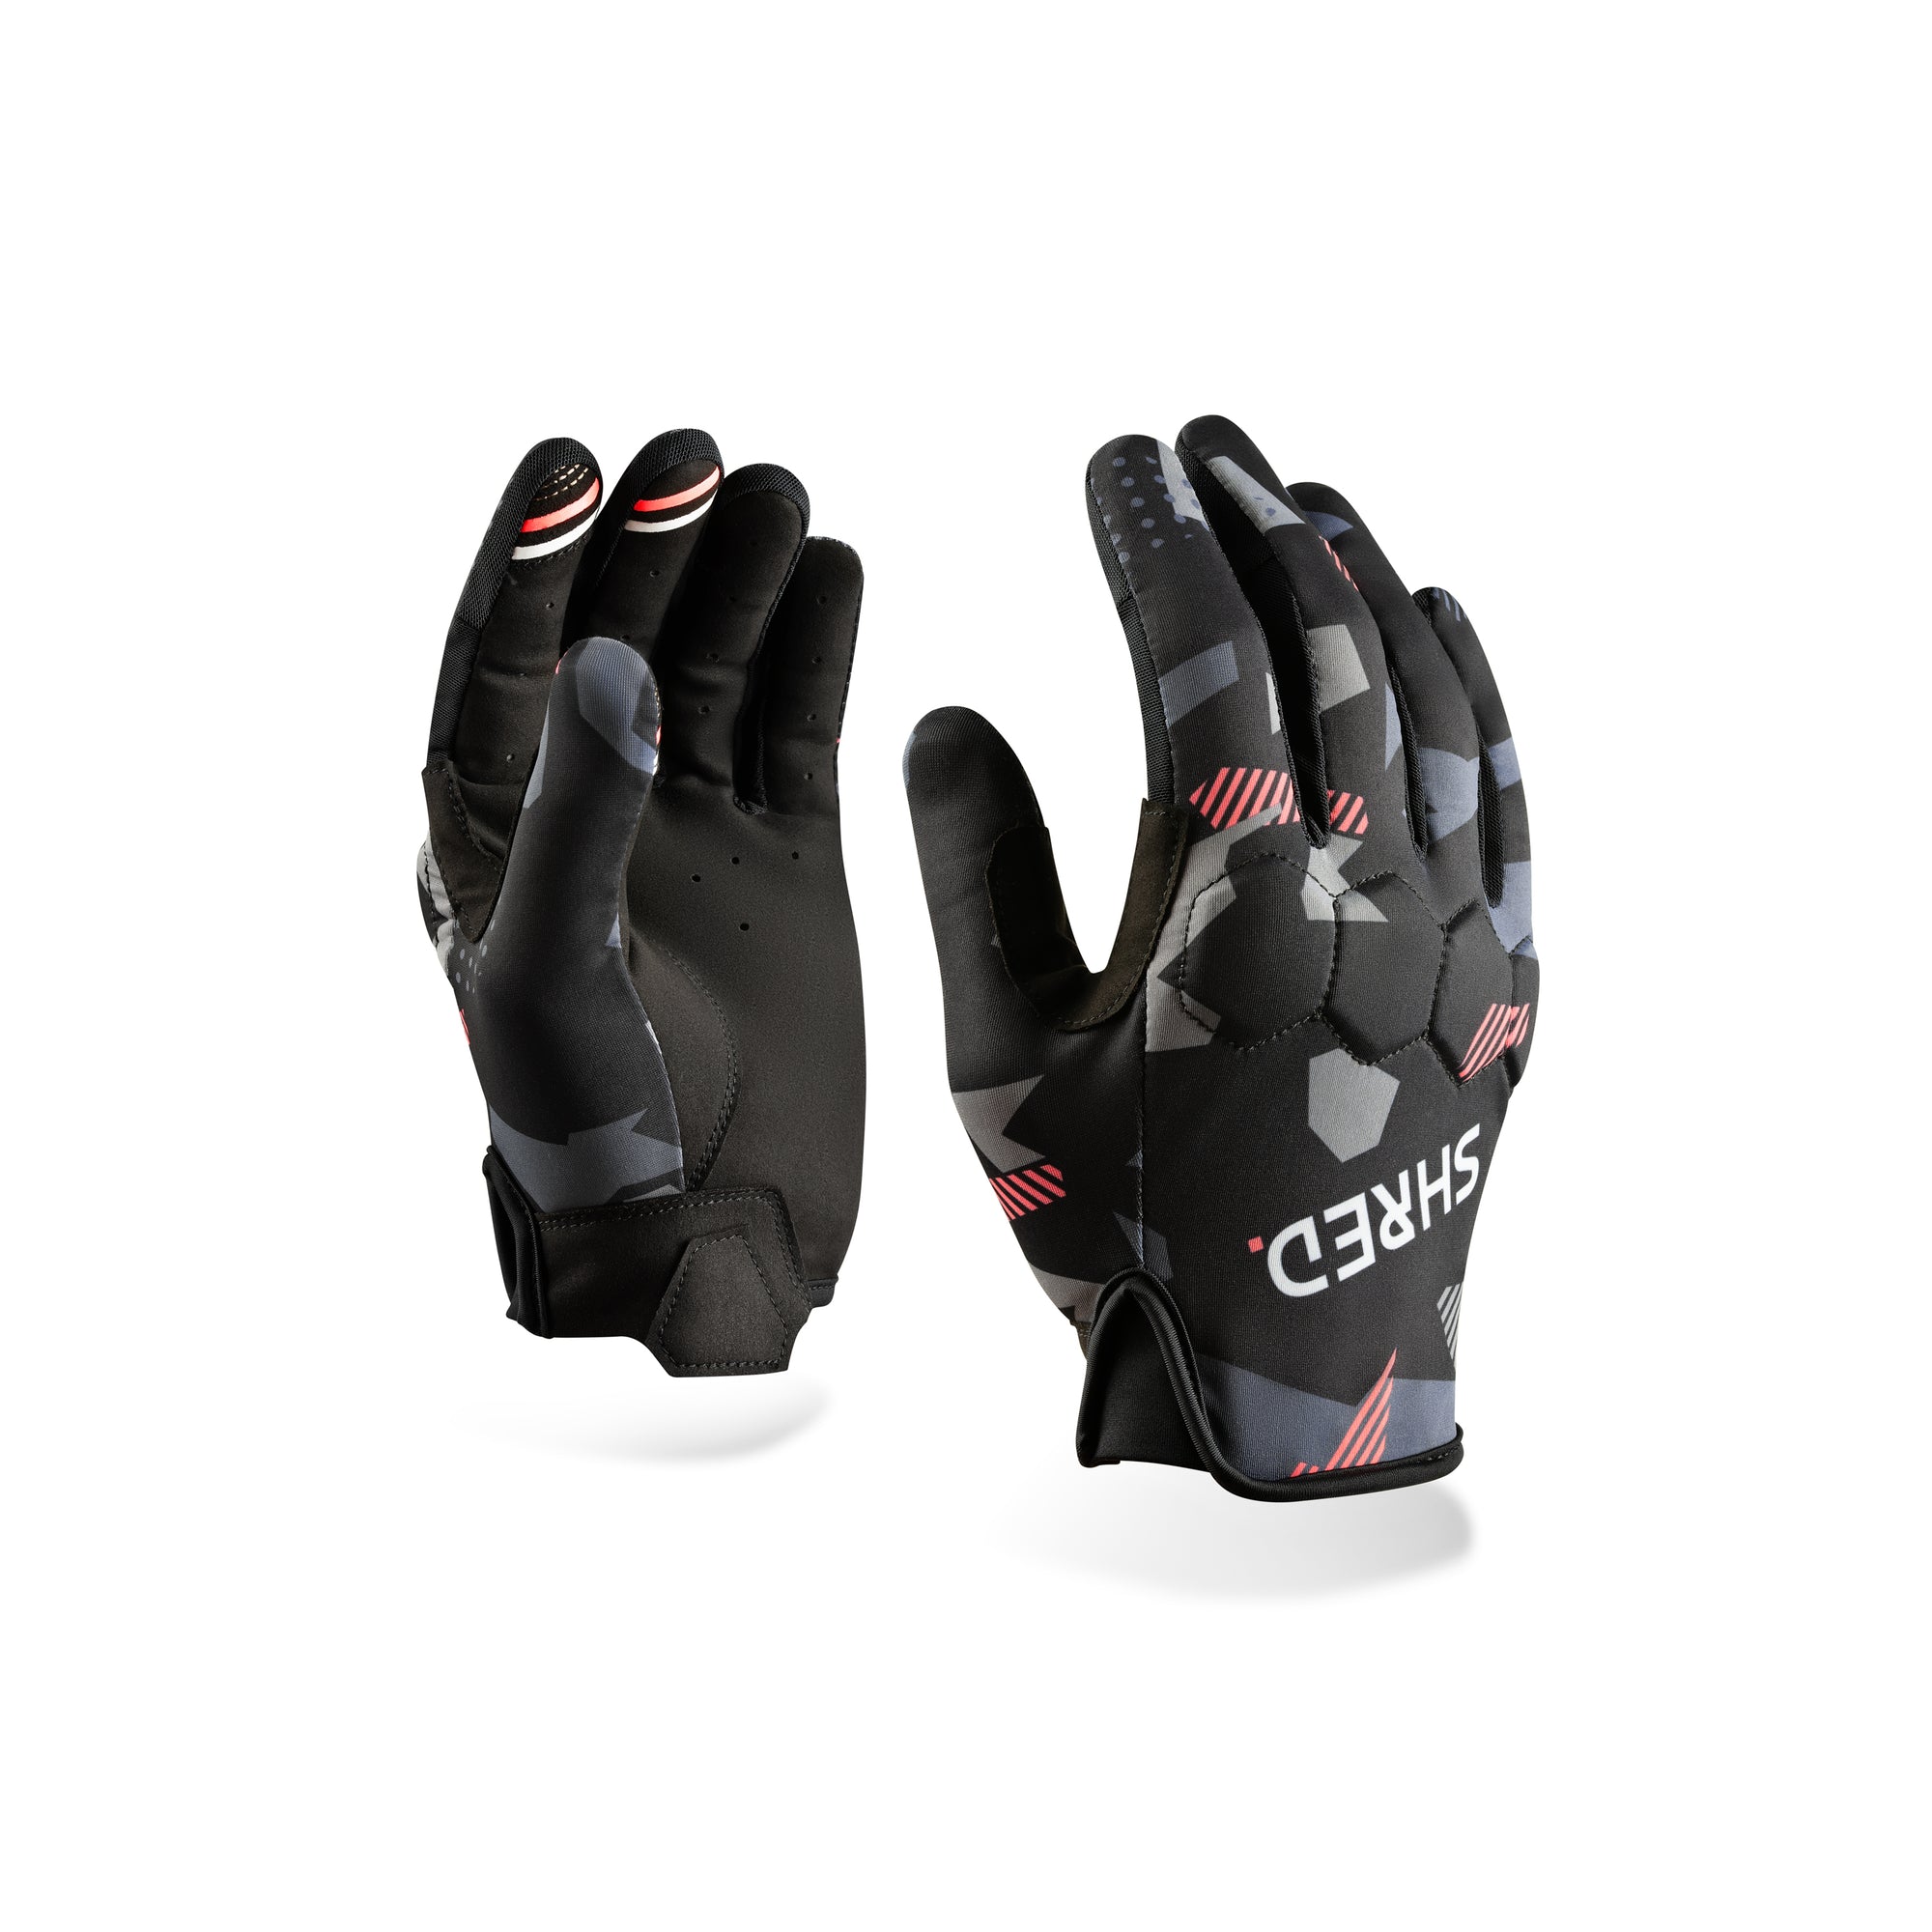 Mtb Protective Gloves Superlite - Protective Gloves|BPBGSN11L,BPBGSN11M,BPBGSN11S,BPBGSN11XL,BPBGSN11XS